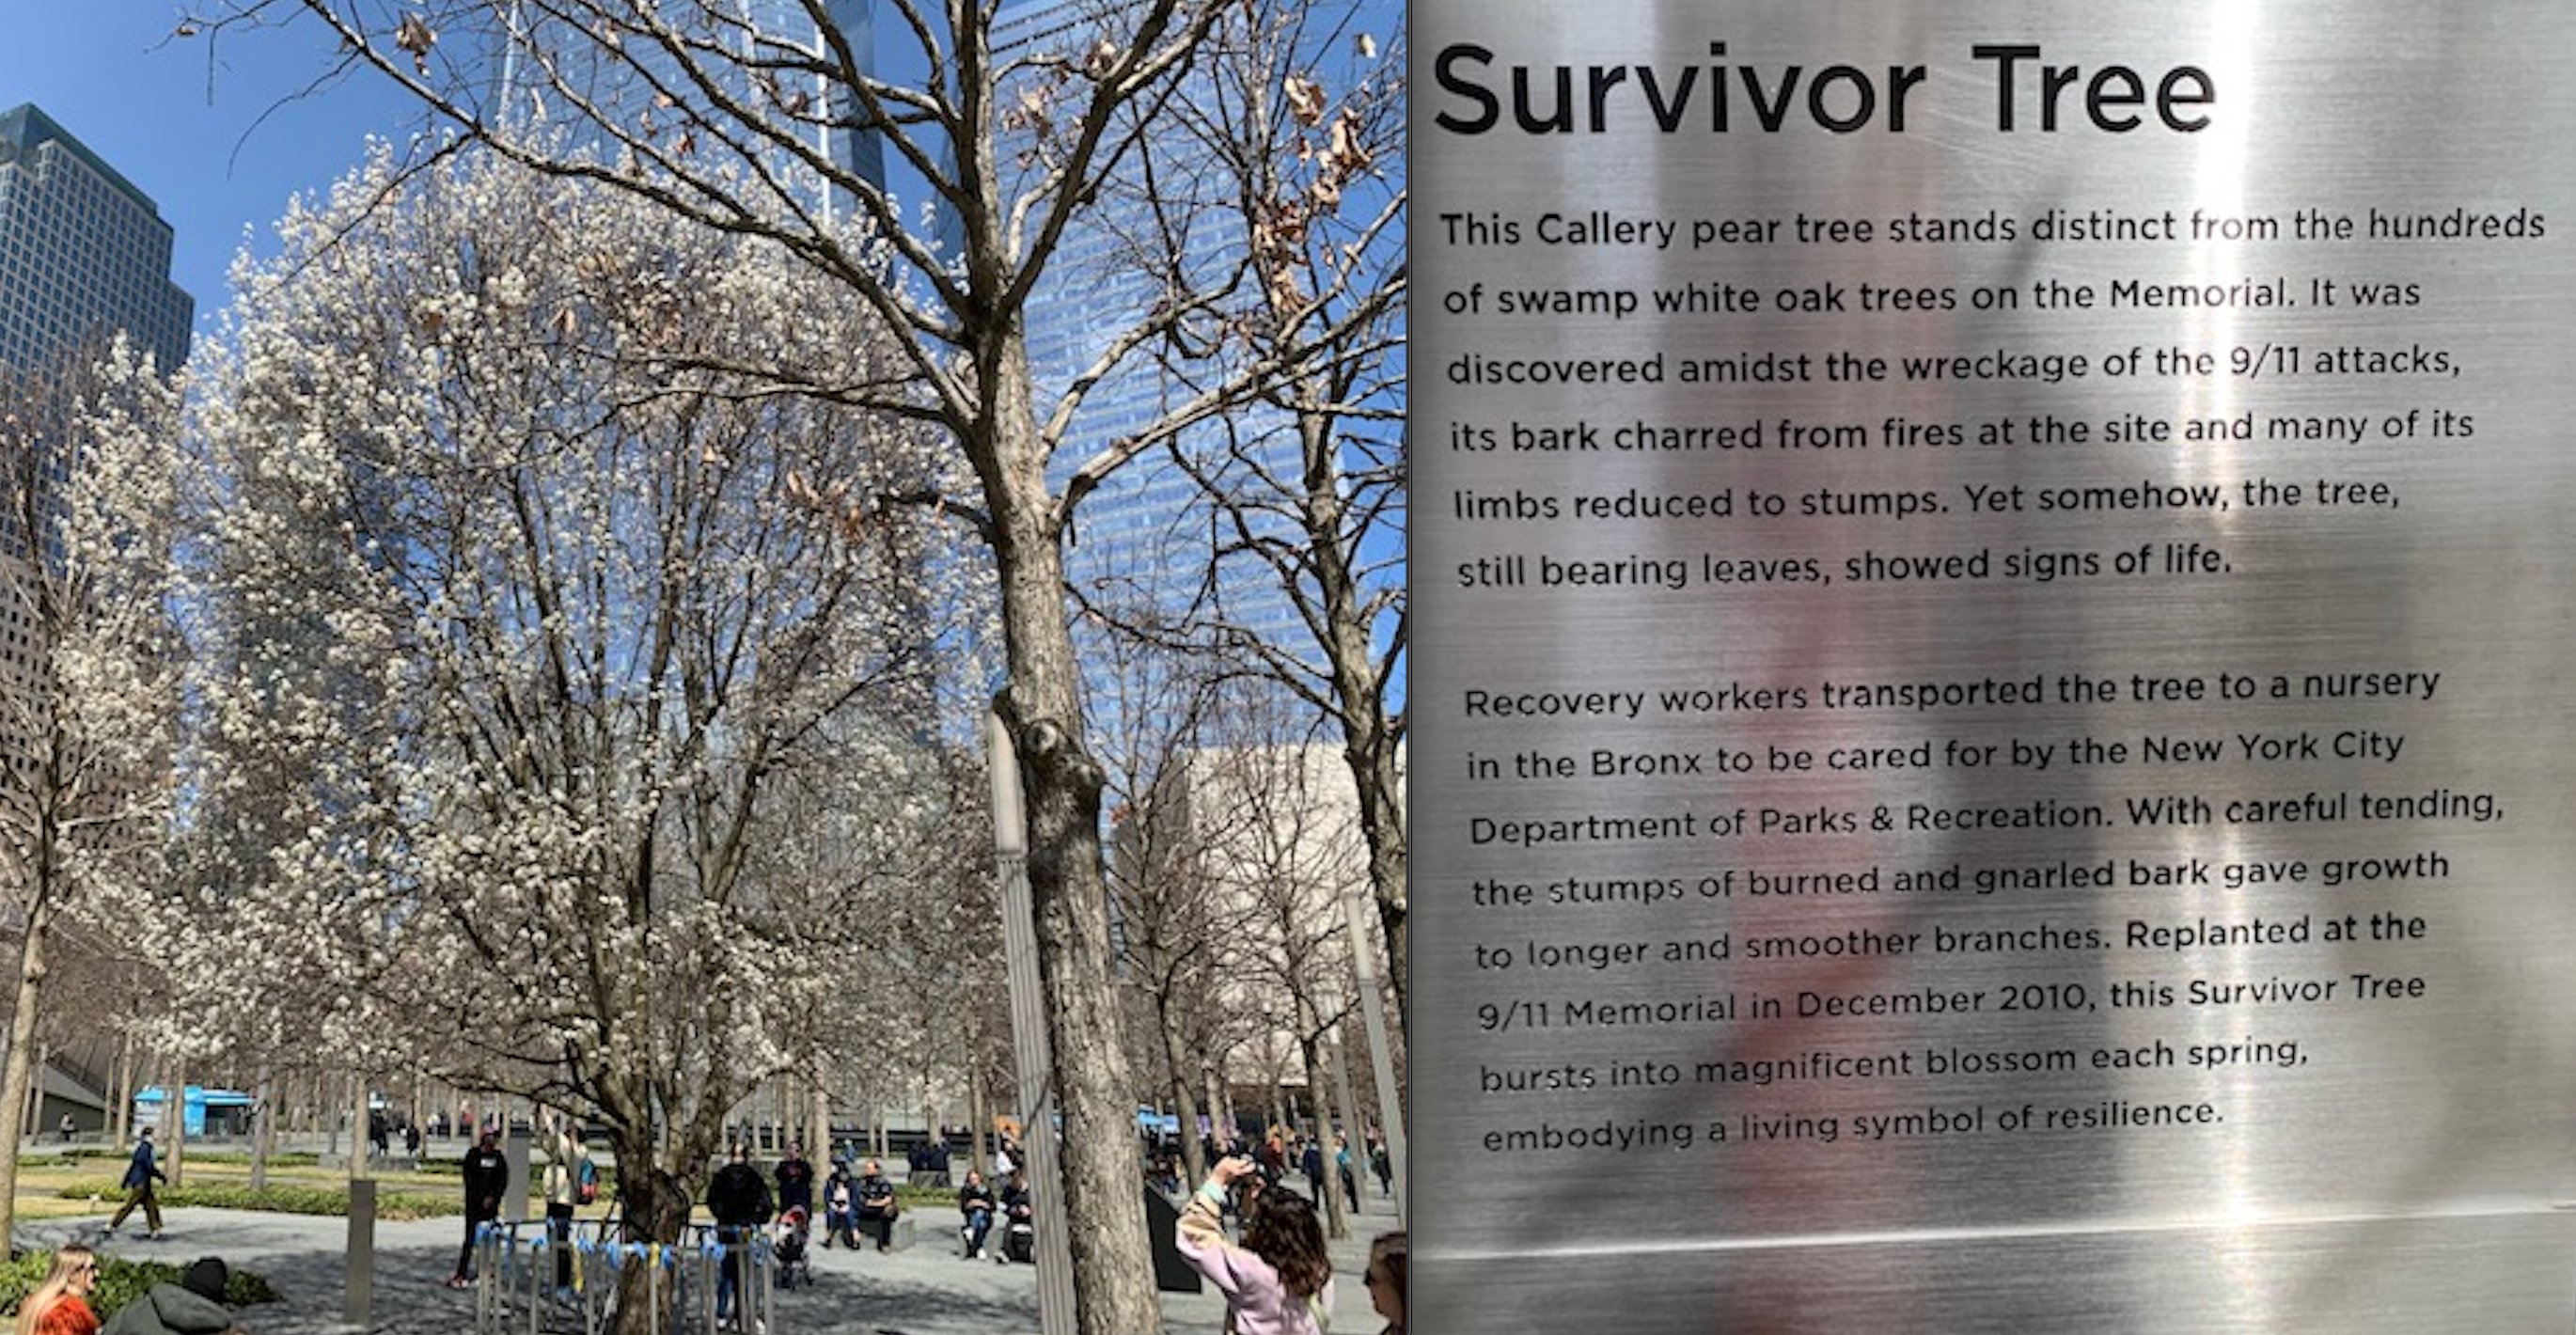 The Survivor Tree